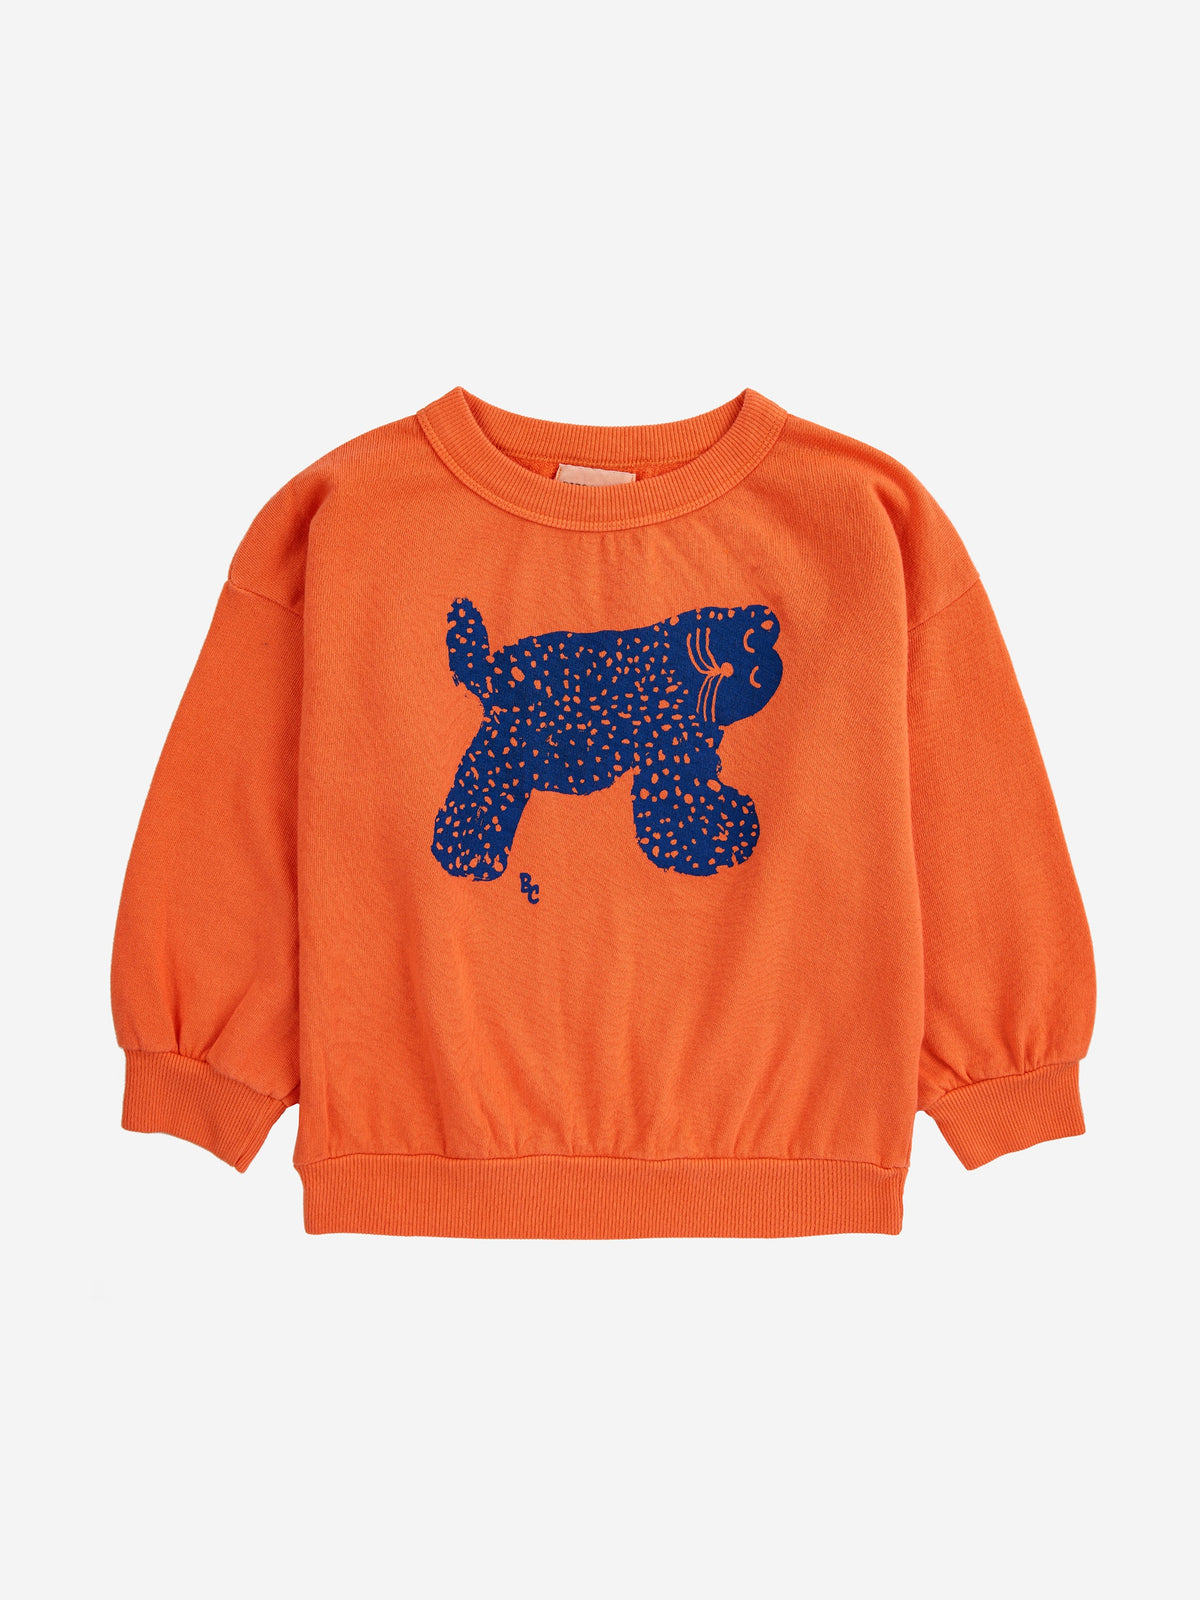 Bobo Choses Big Cat sweatshirt